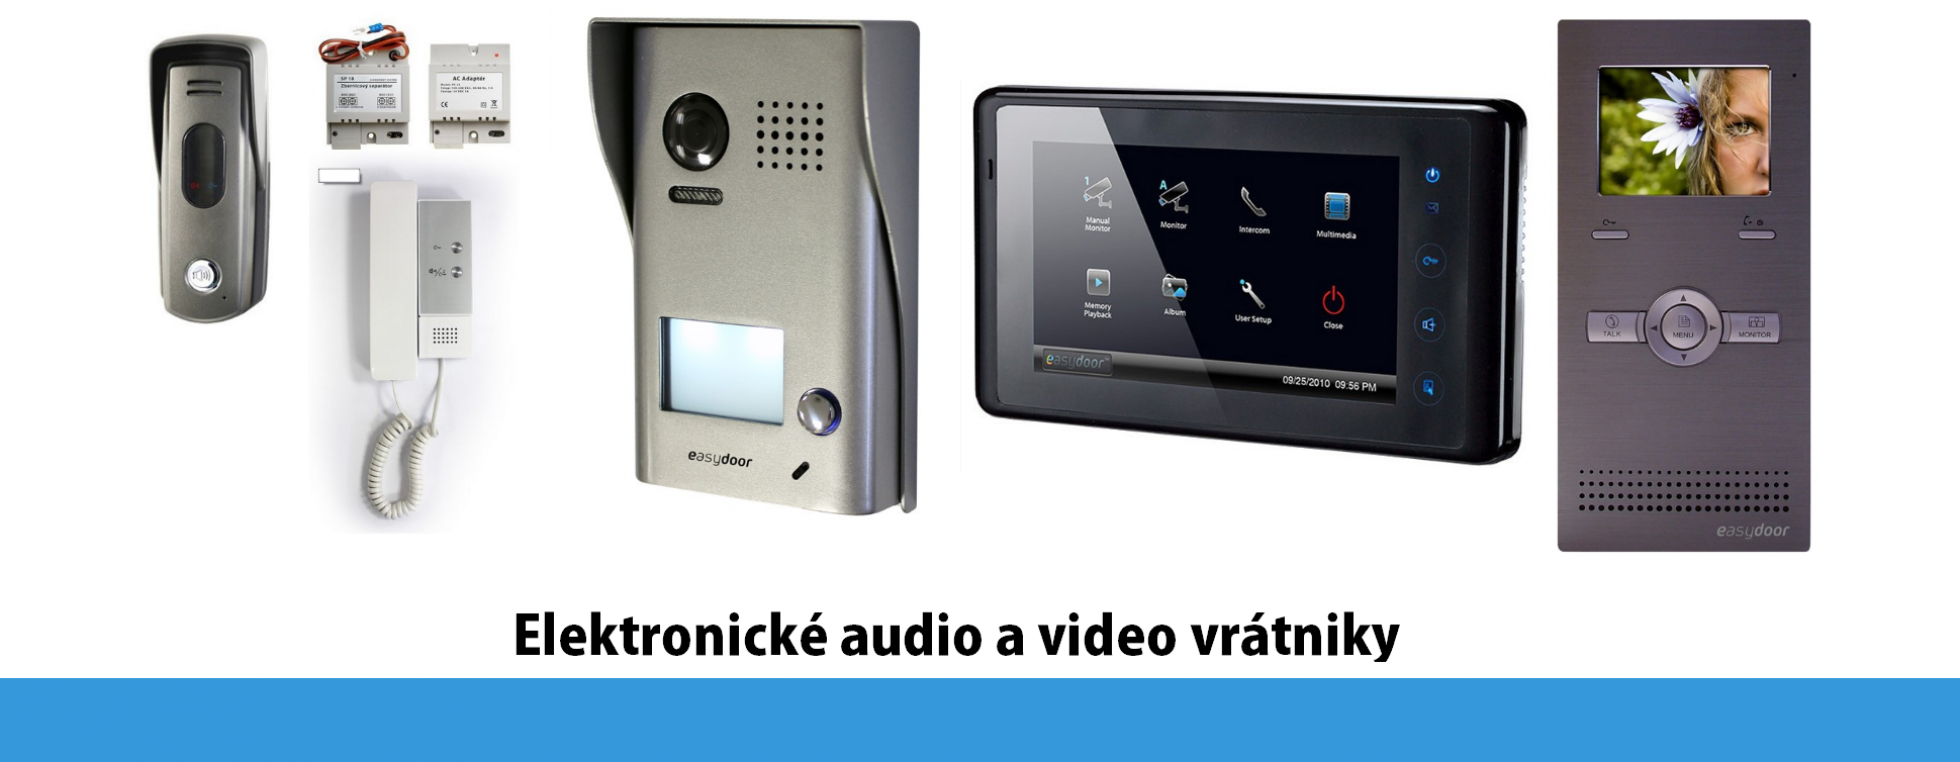 elektronické audio a video vrátniky